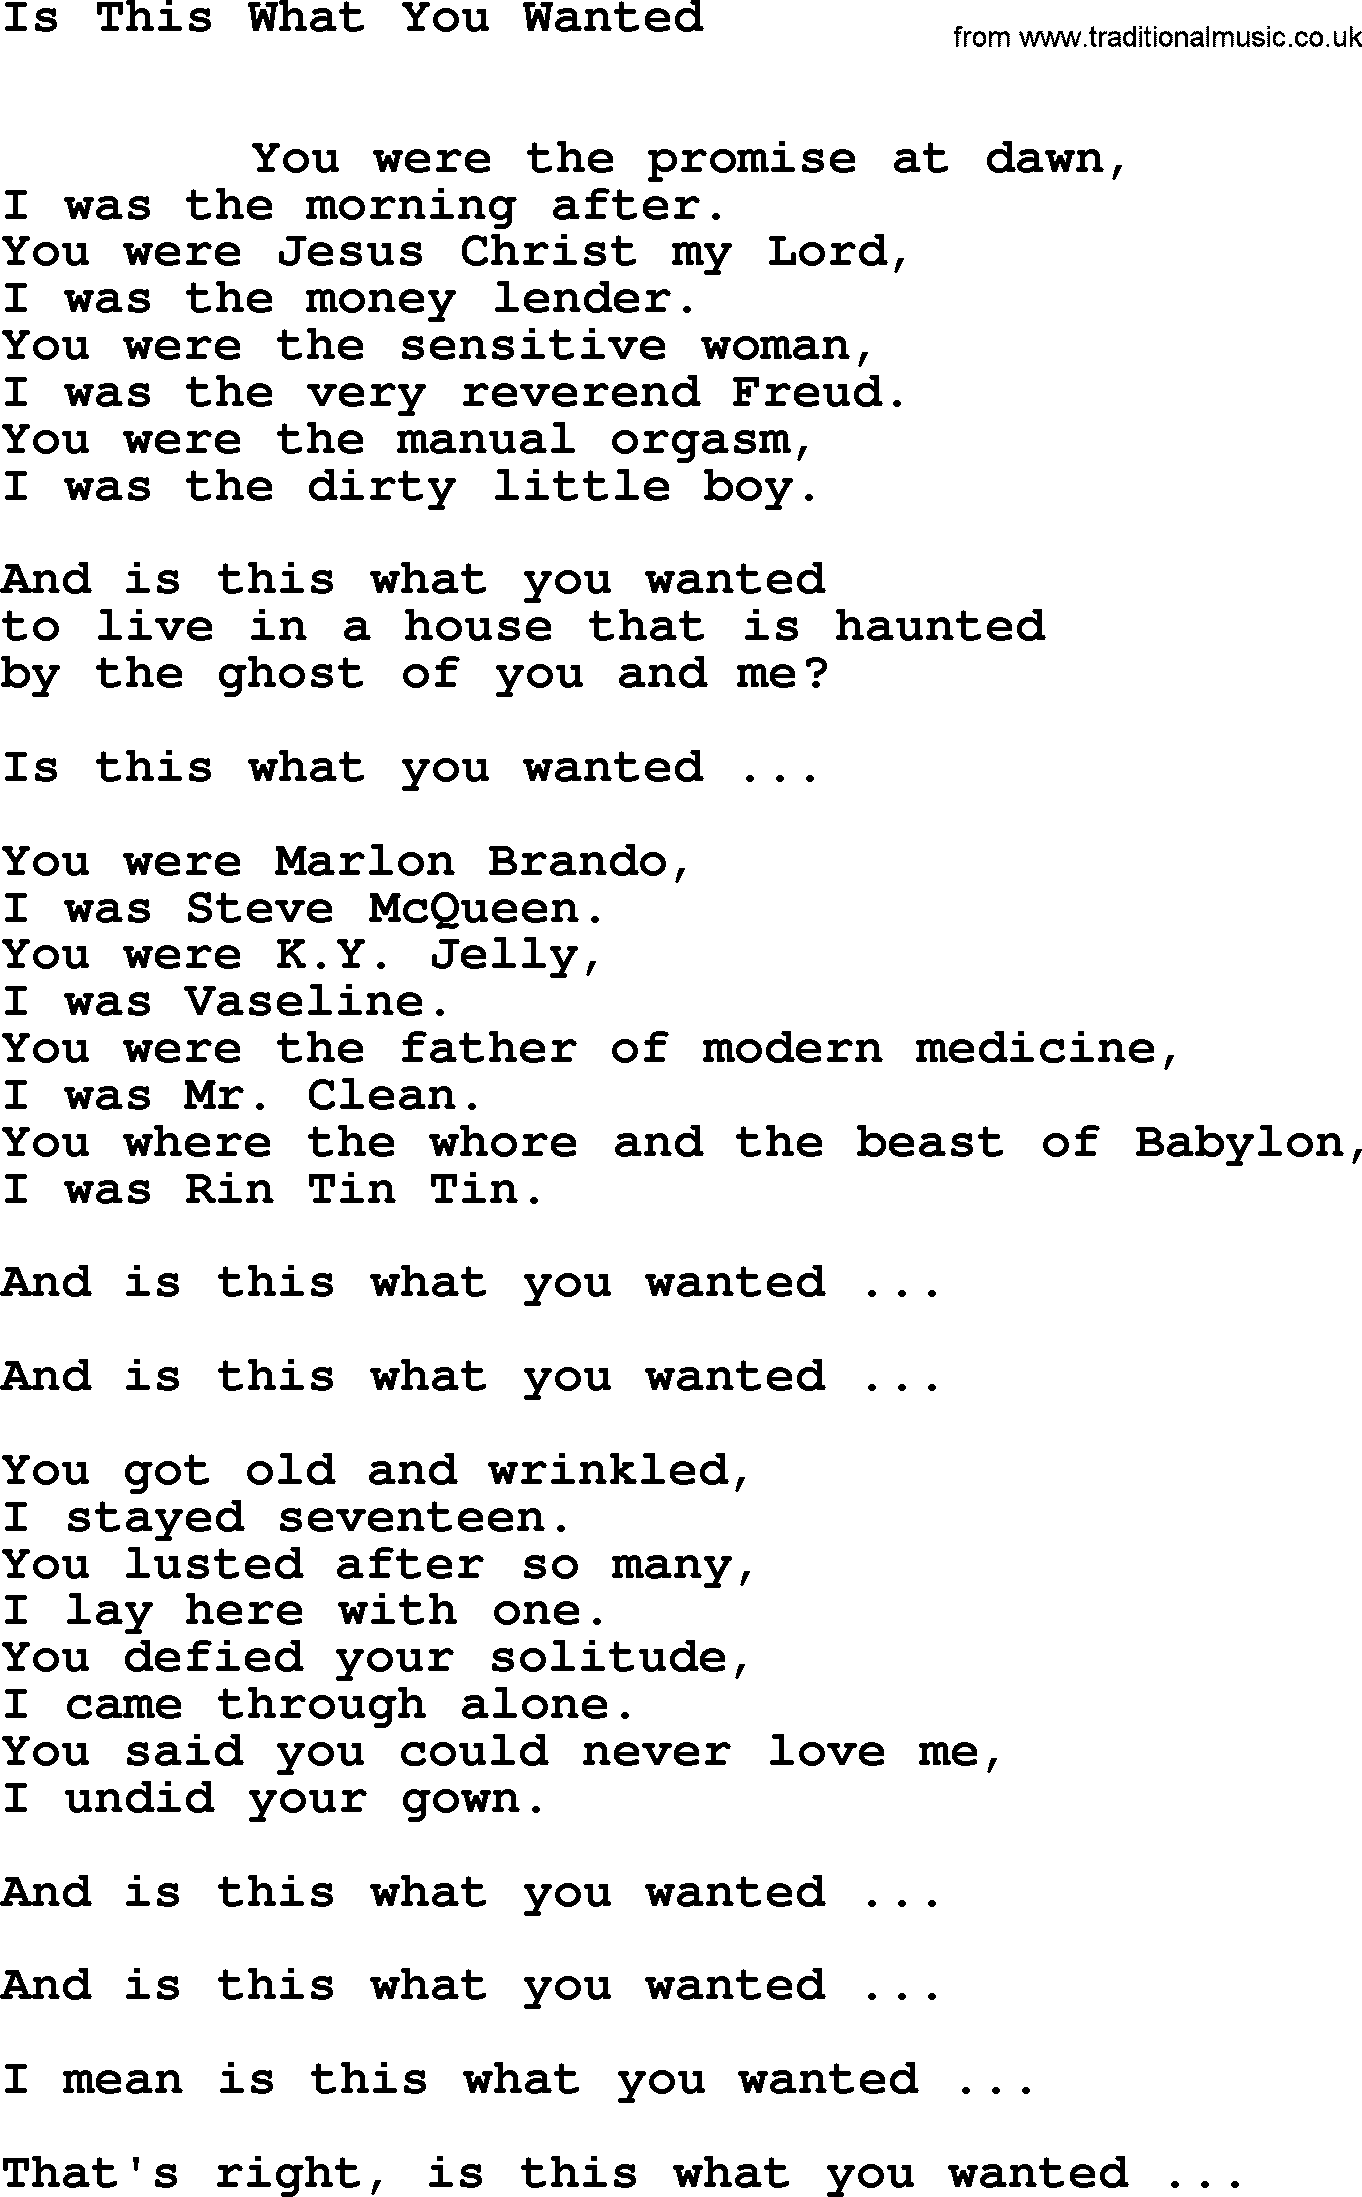 Leonard Cohen song What You Wanted-leonard-cohen.txt lyrics